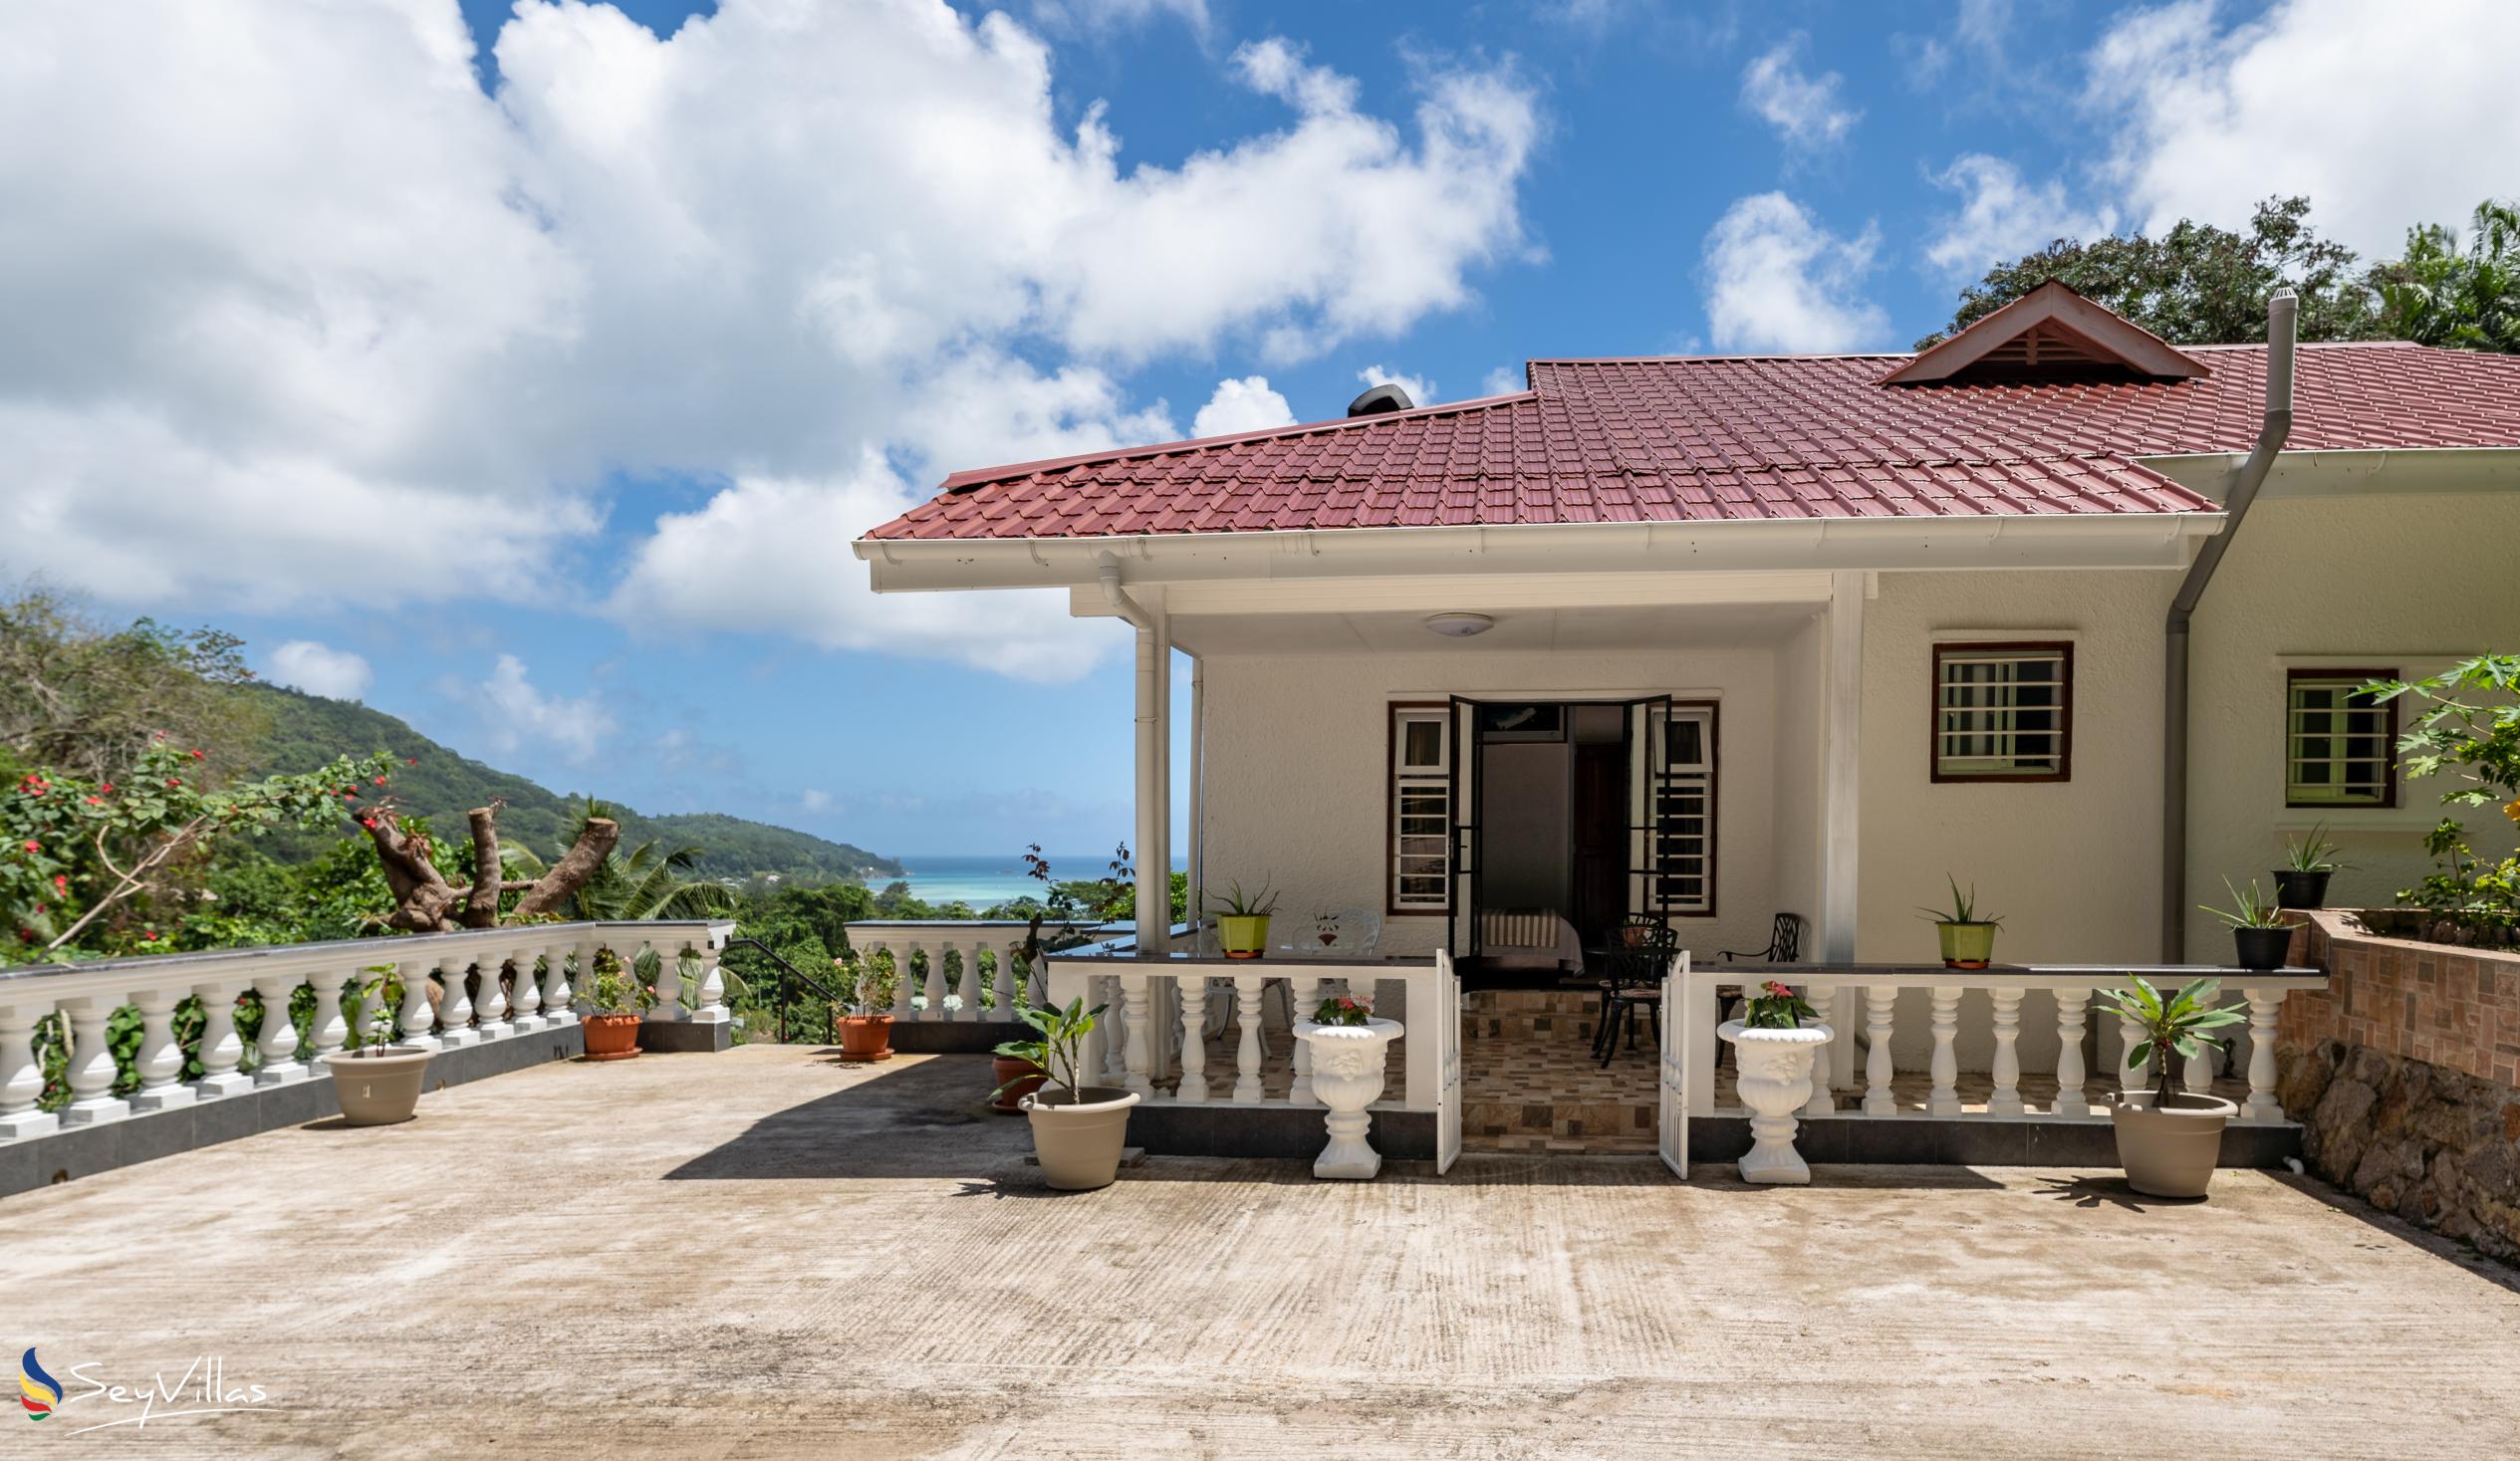 Foto 1: Jane's Serenity Guesthouse - Aussenbereich - Mahé (Seychellen)